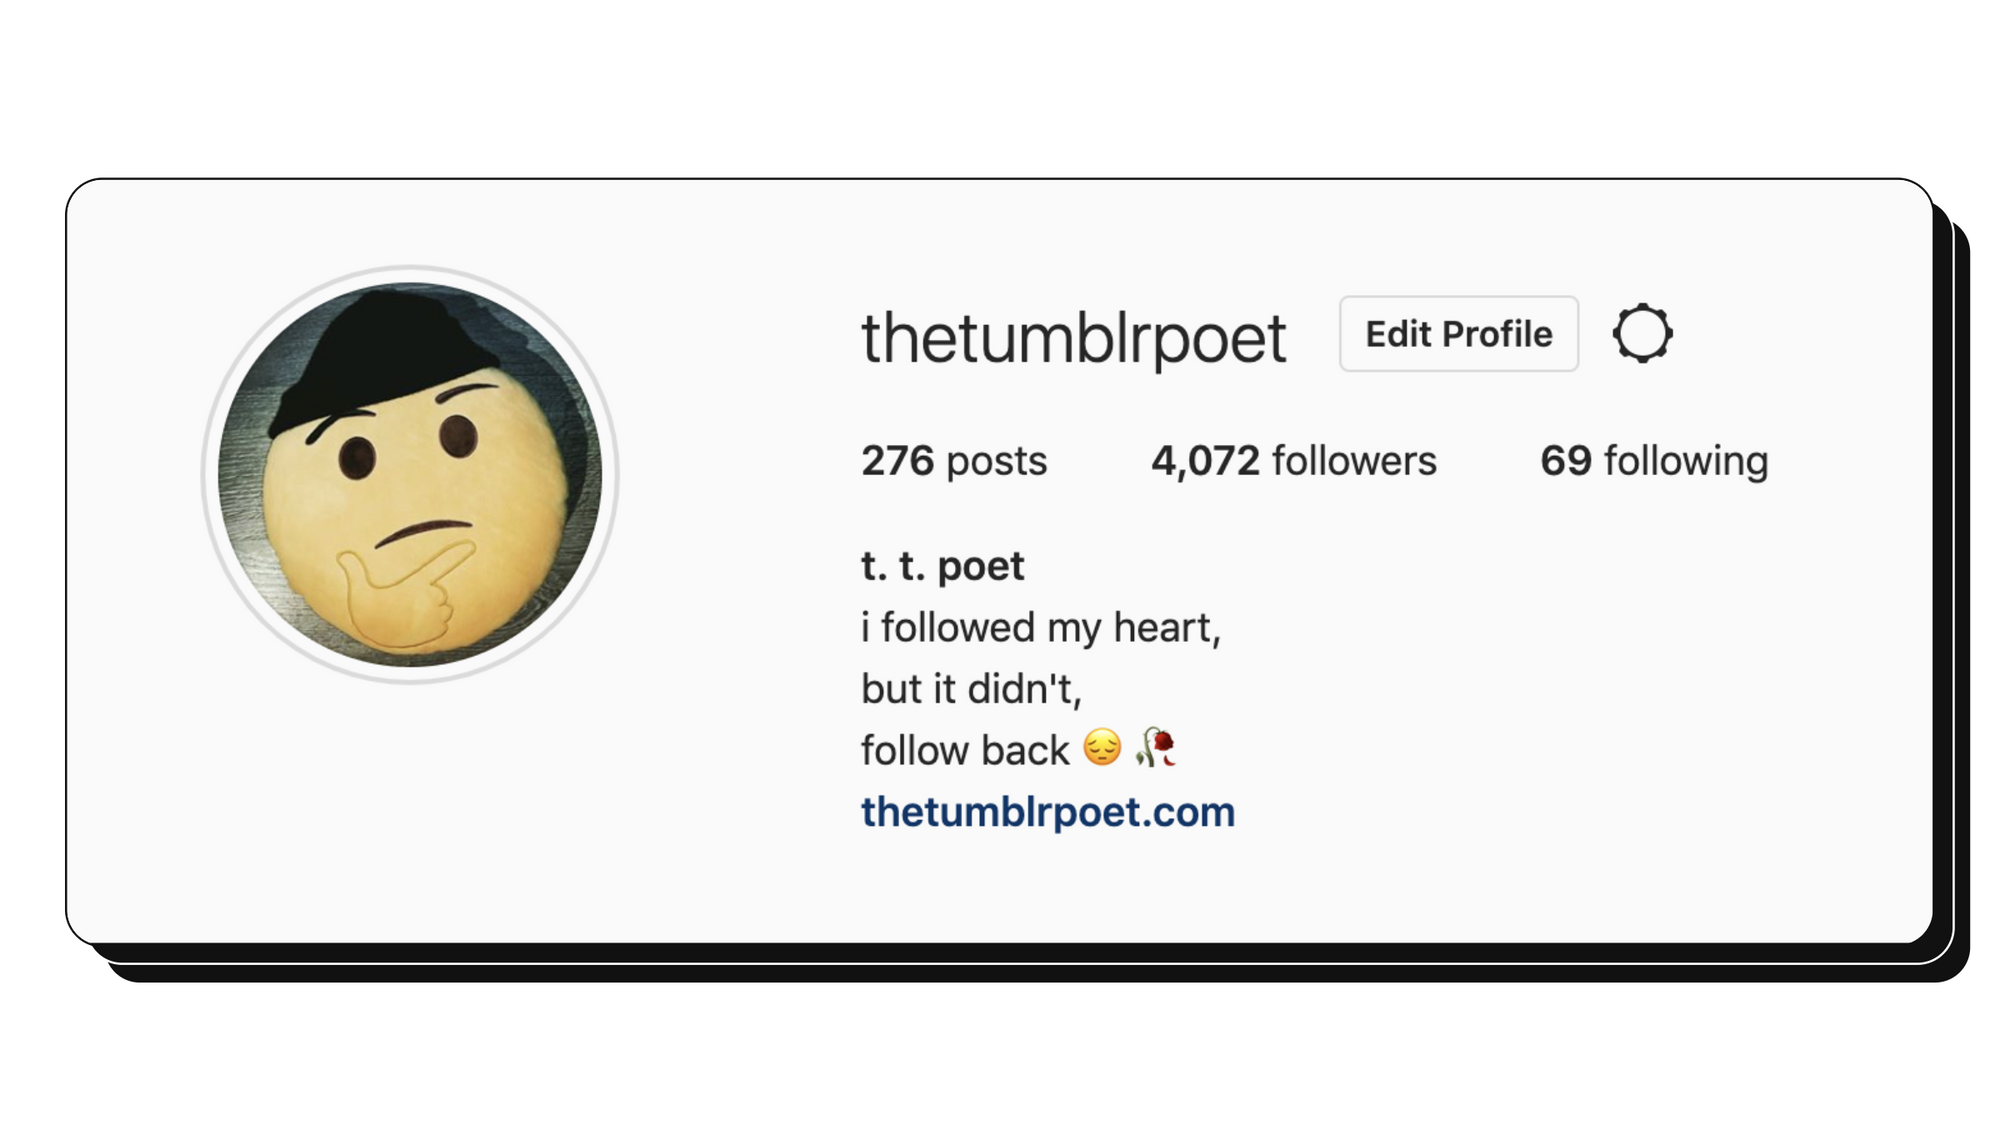 @thretumblrpoet Instagram profile and bio